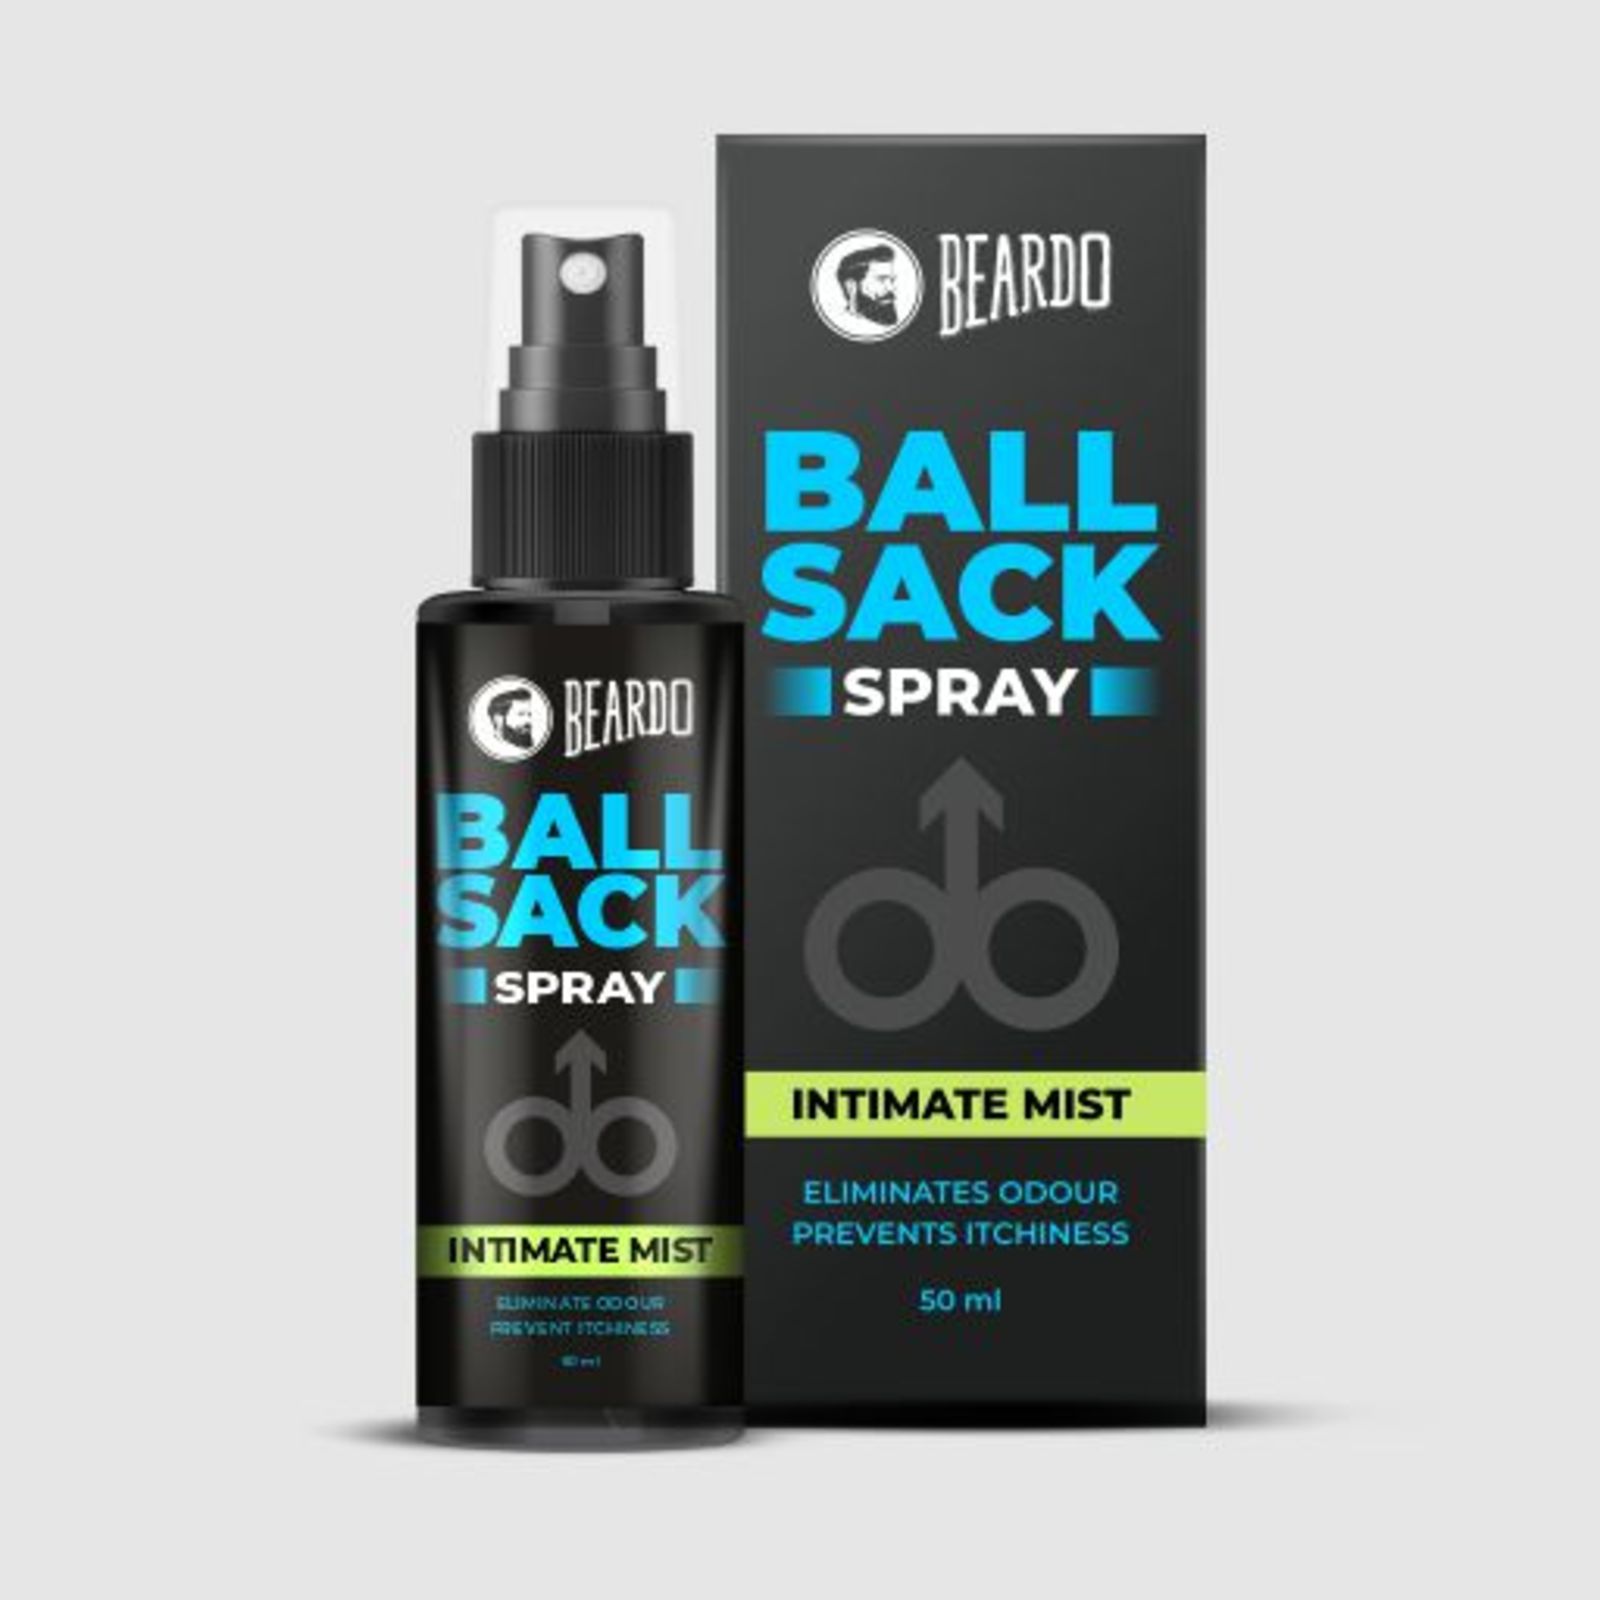 Beardo Ball Sack Spray - For Fresh & Dry Balls coupon code